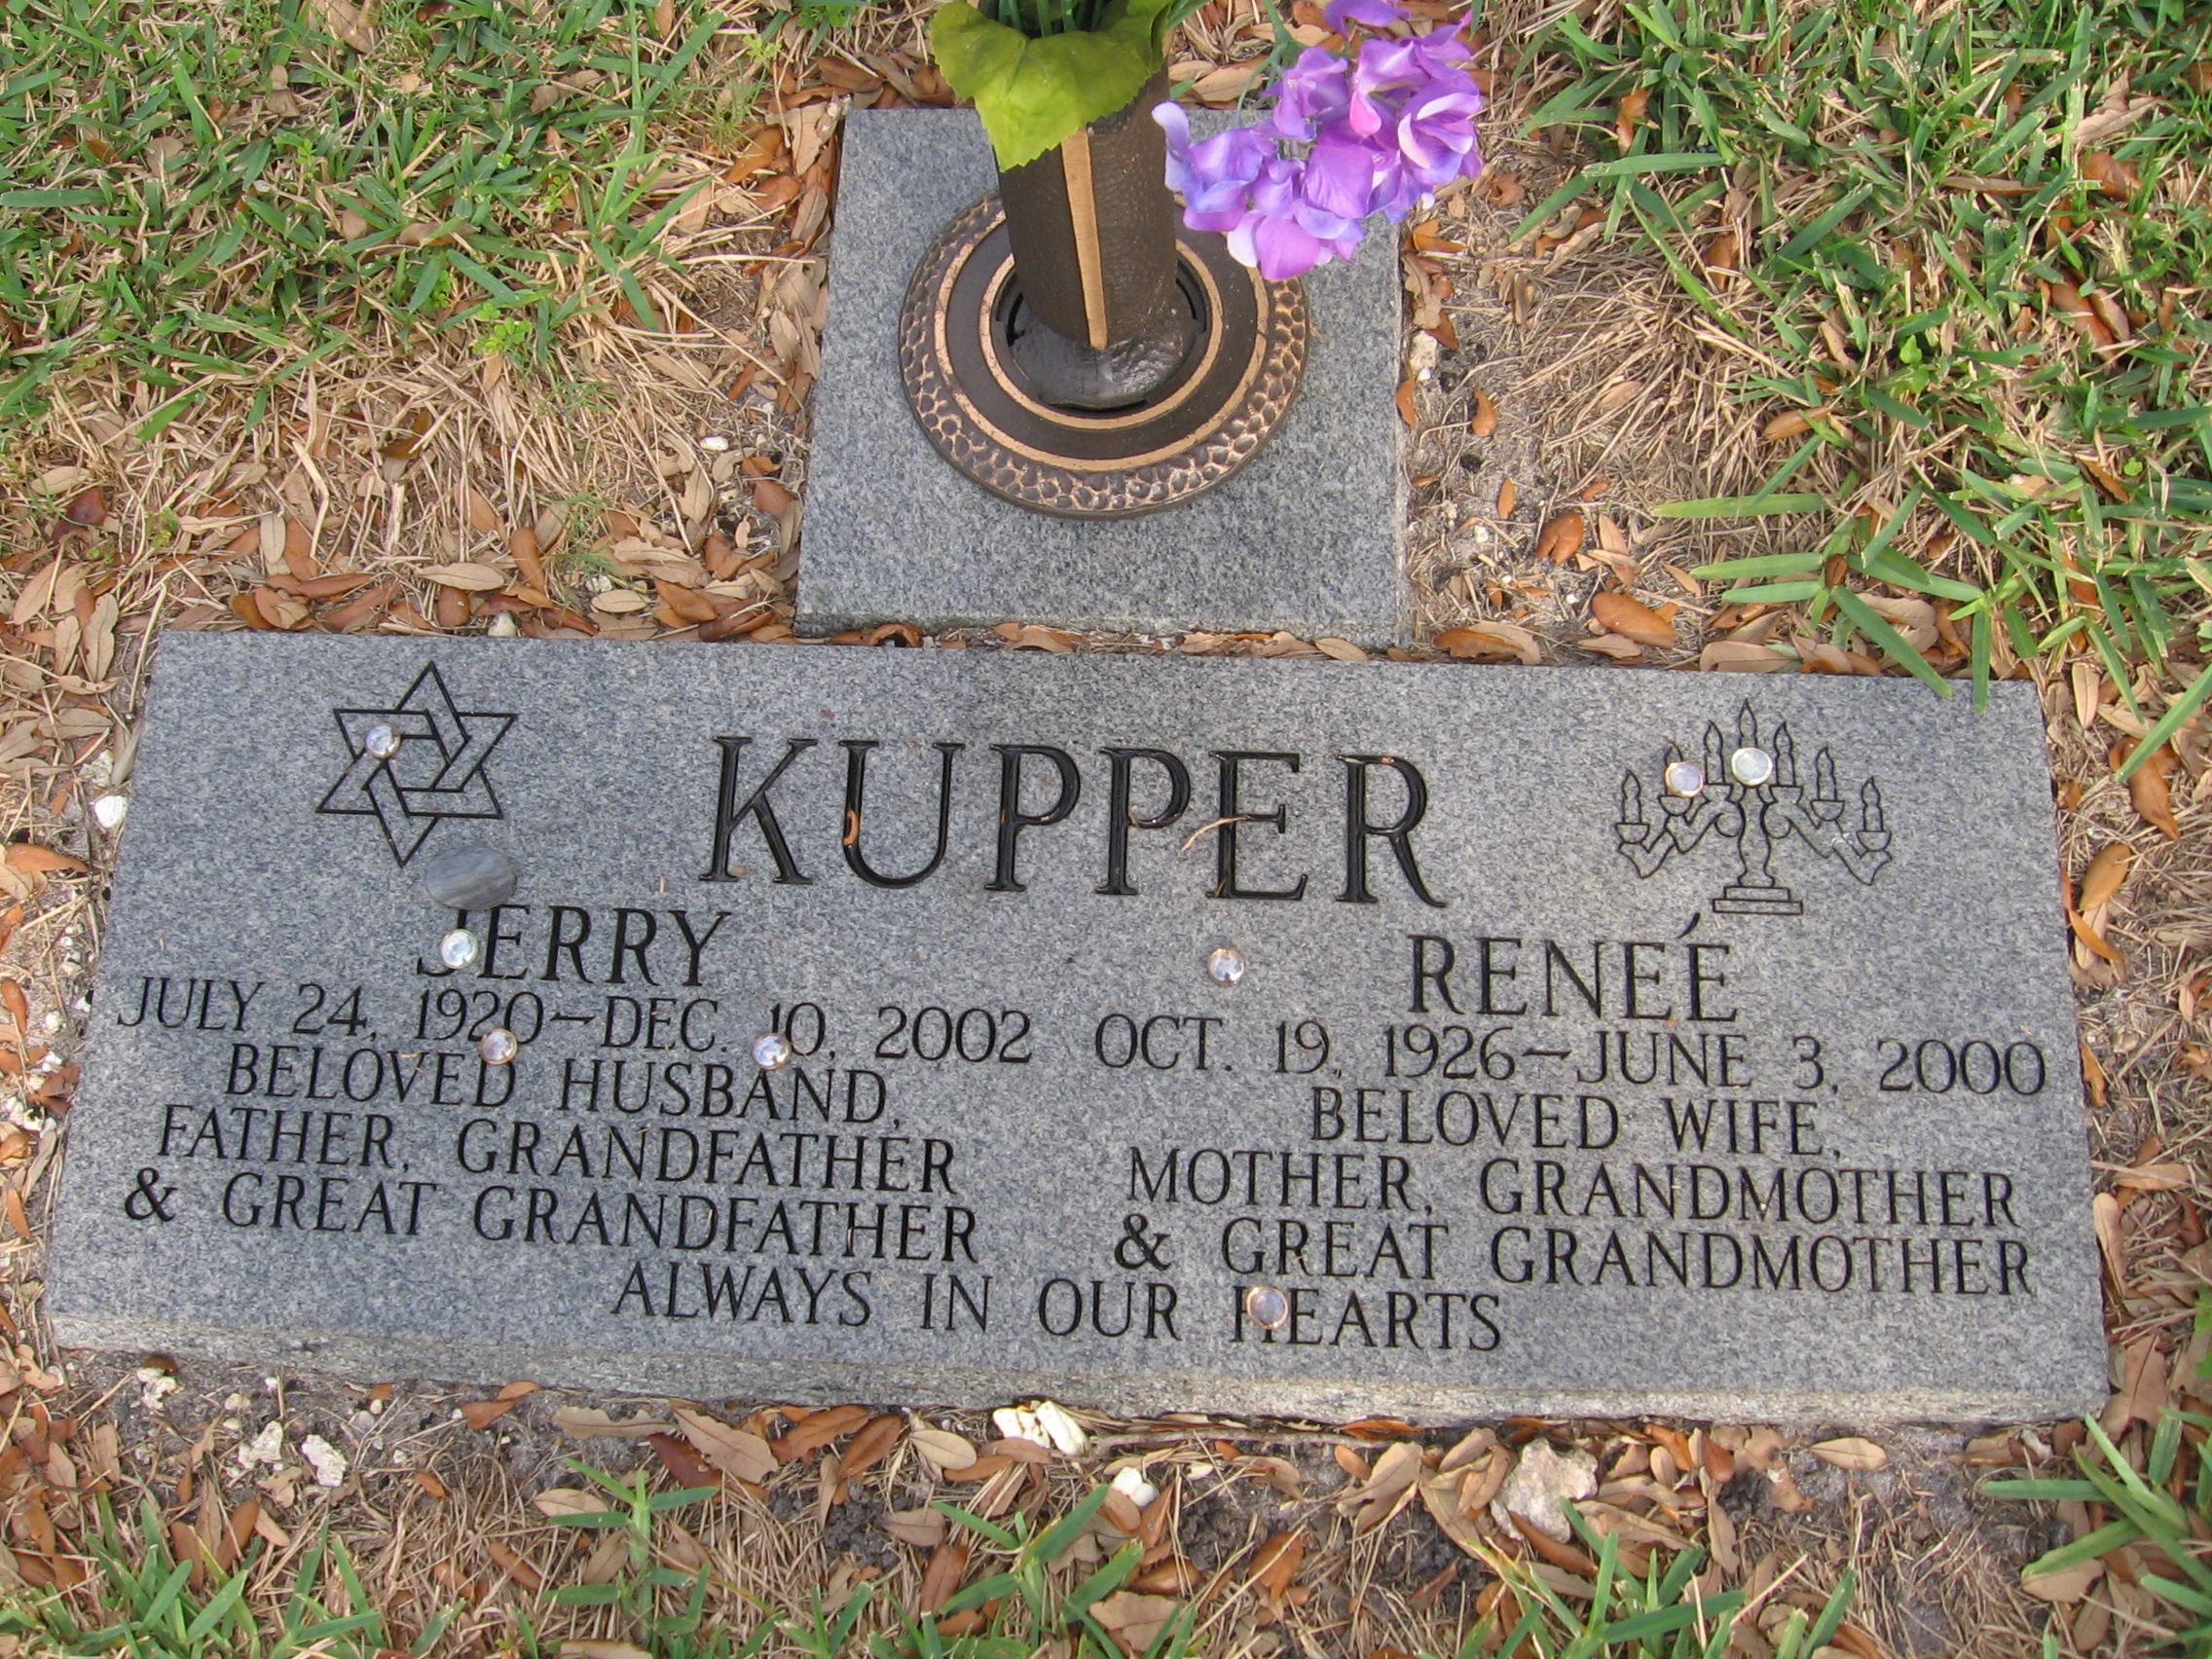 Jerry Kupper